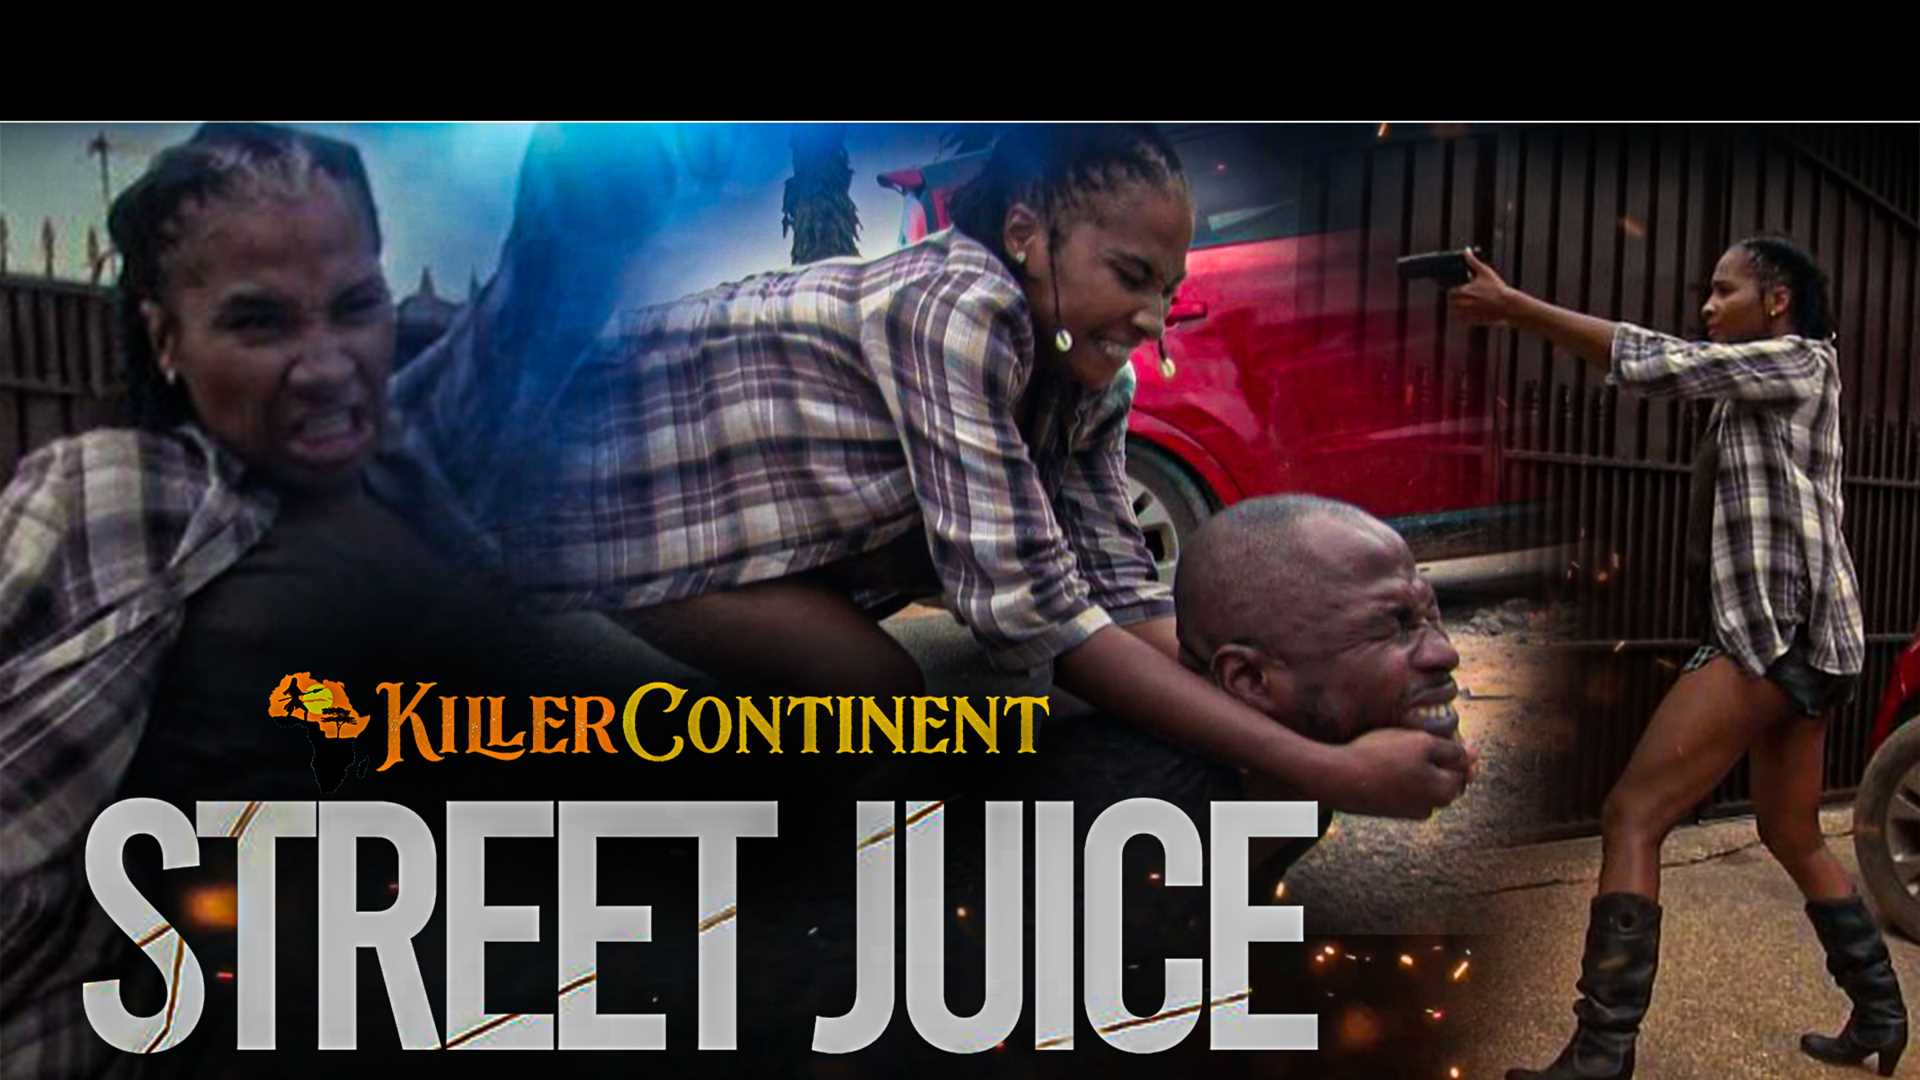 #6 - Street Juice